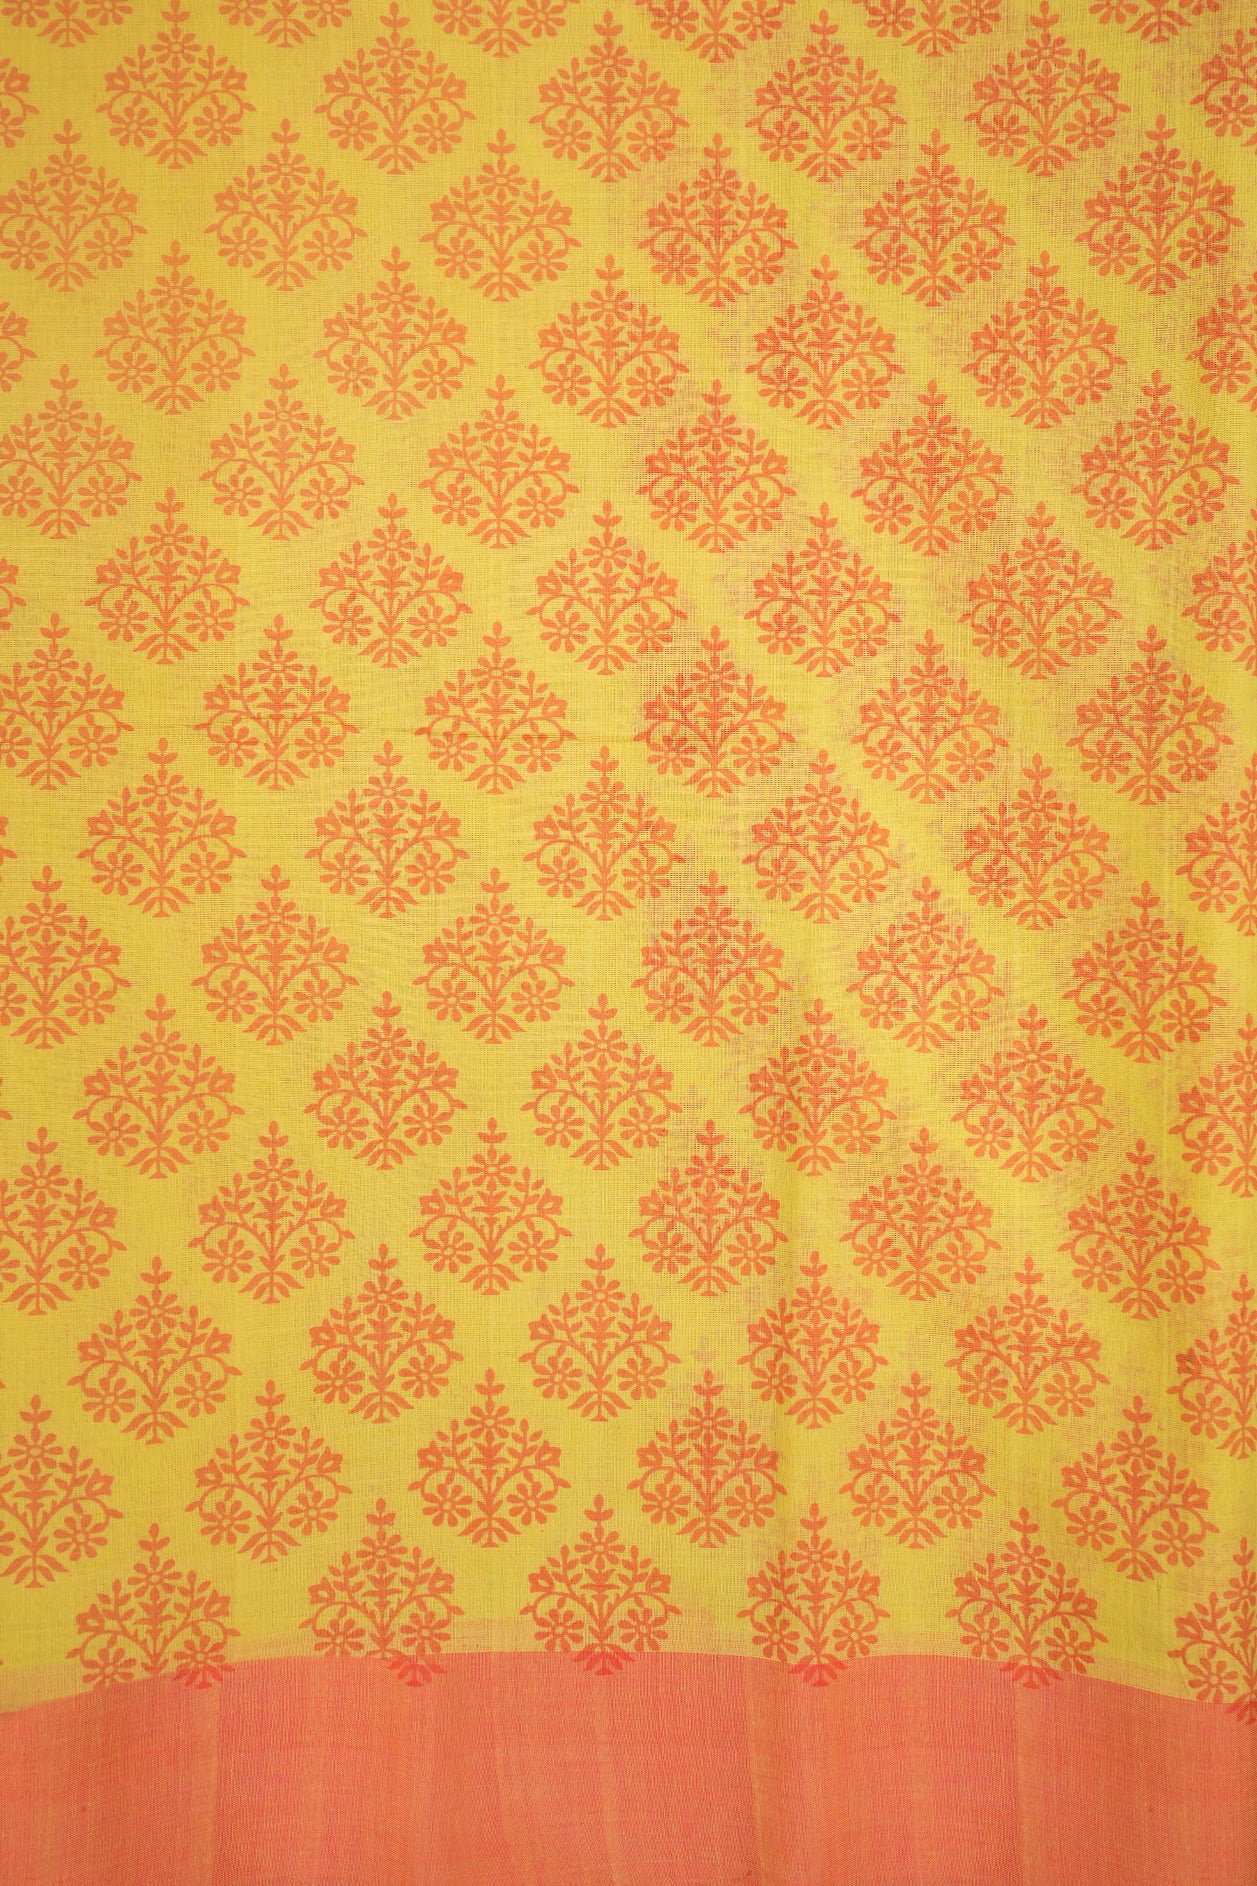 Printed Floral Buttas Royal Yellow Mangalagiri Cotton Saree